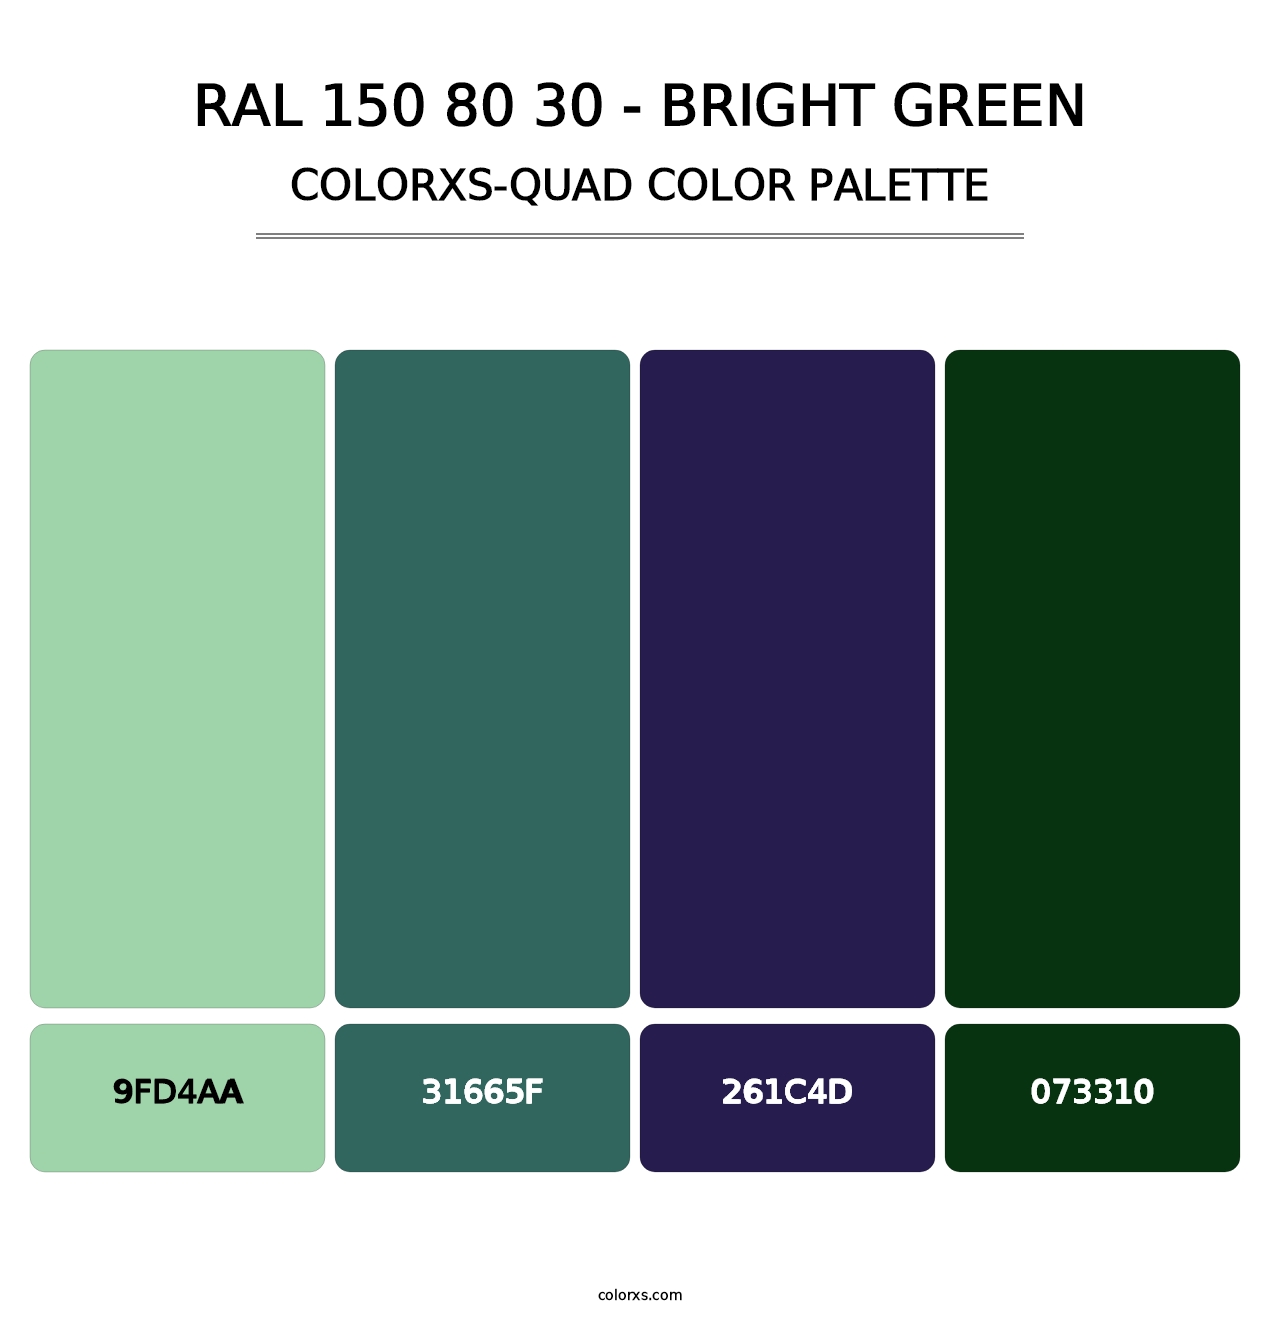 RAL 150 80 30 - Bright Green - Colorxs Quad Palette